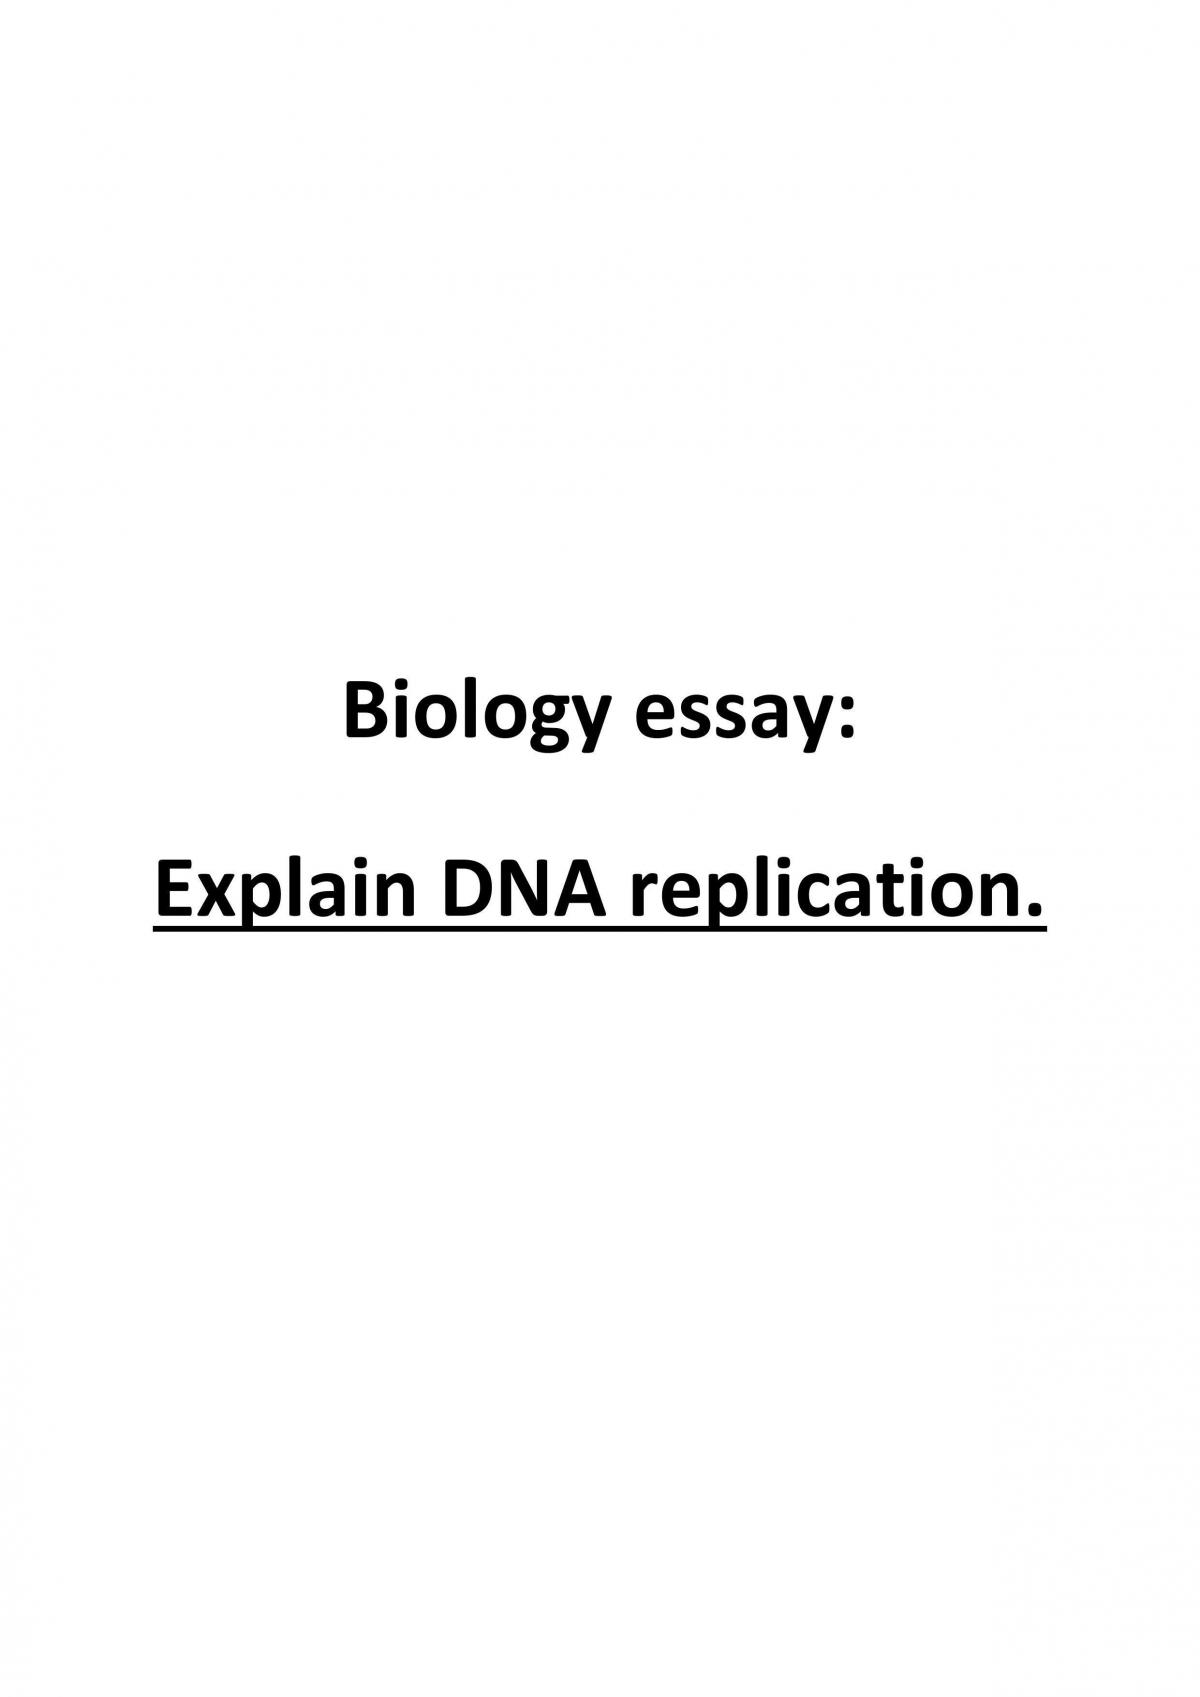 dna replication essay pdf